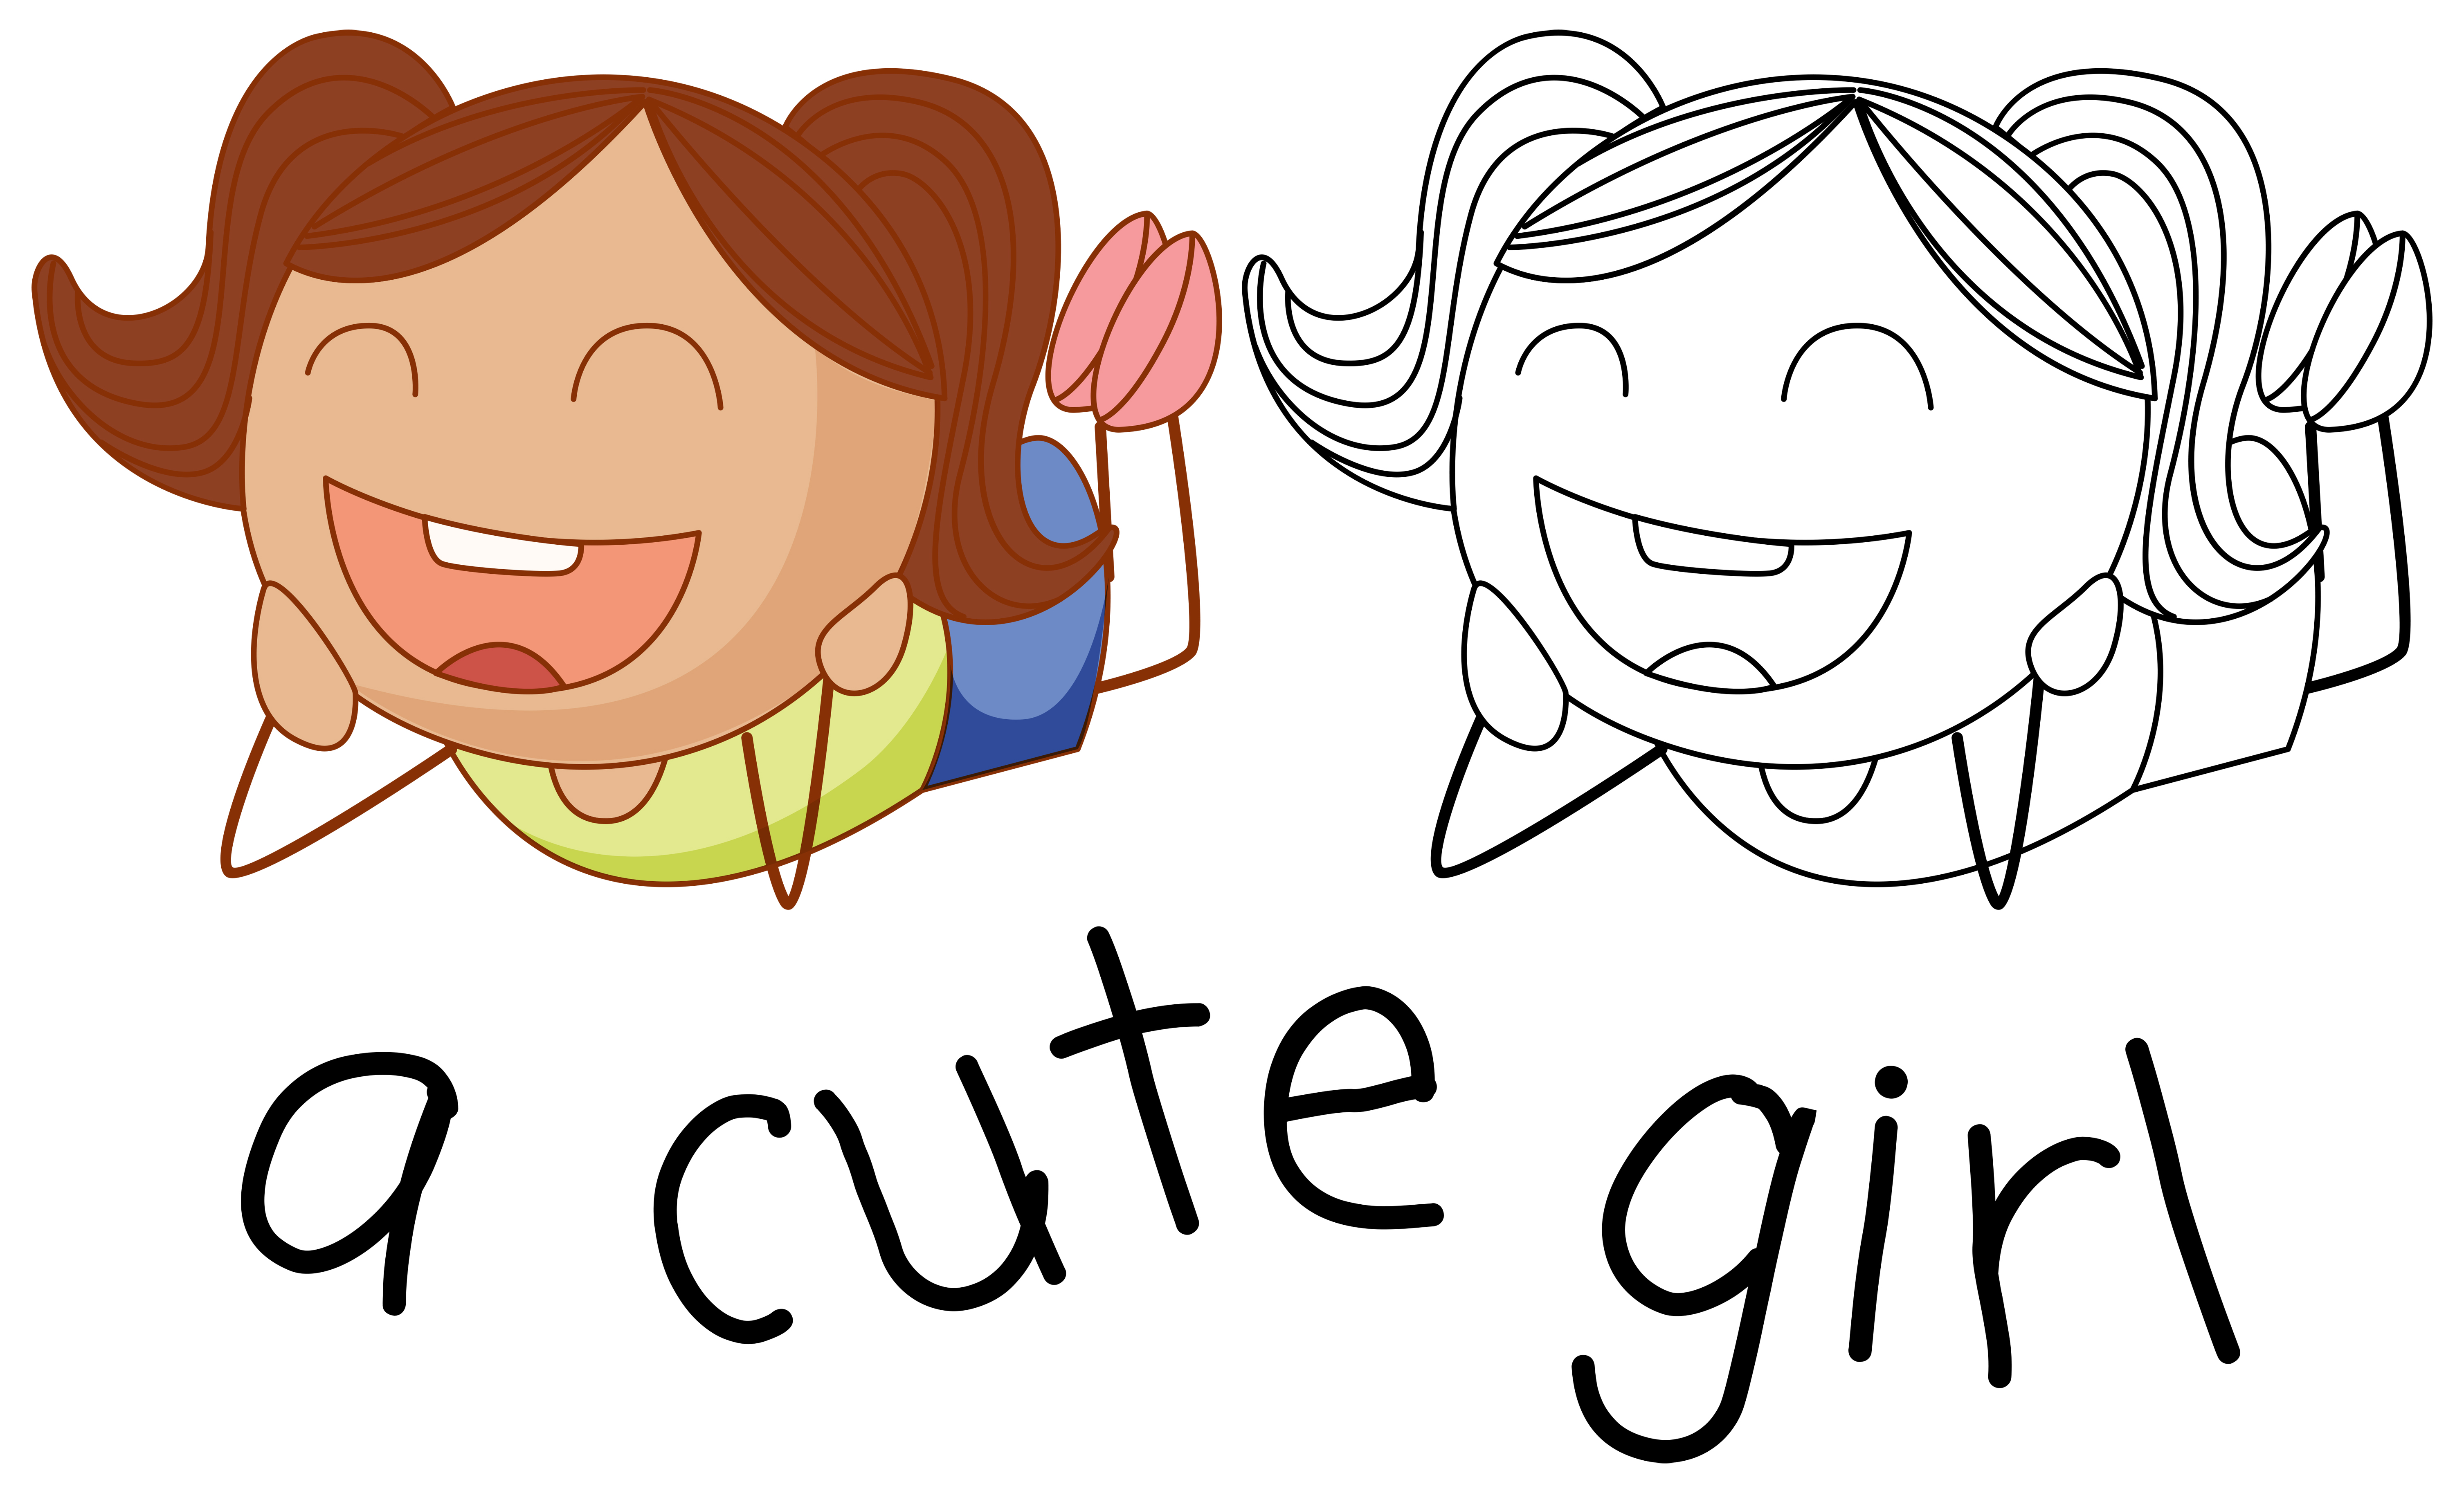  Doodle  cute girl  character Download Free Vectors 